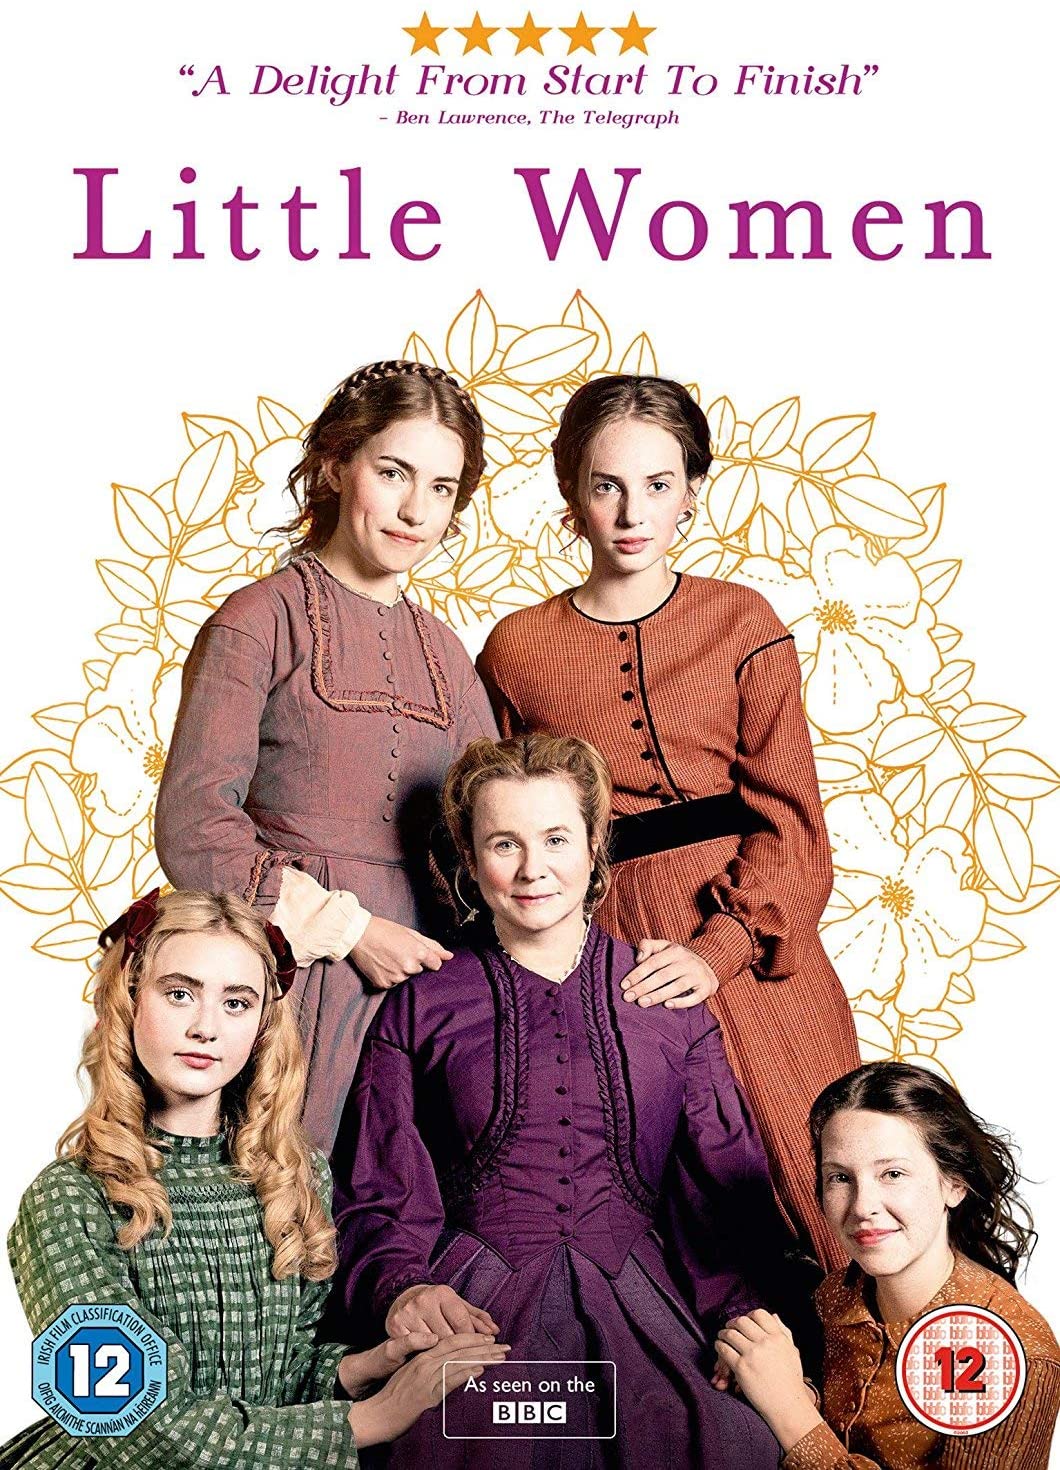 Little Women - Romance/Drama [DVD]